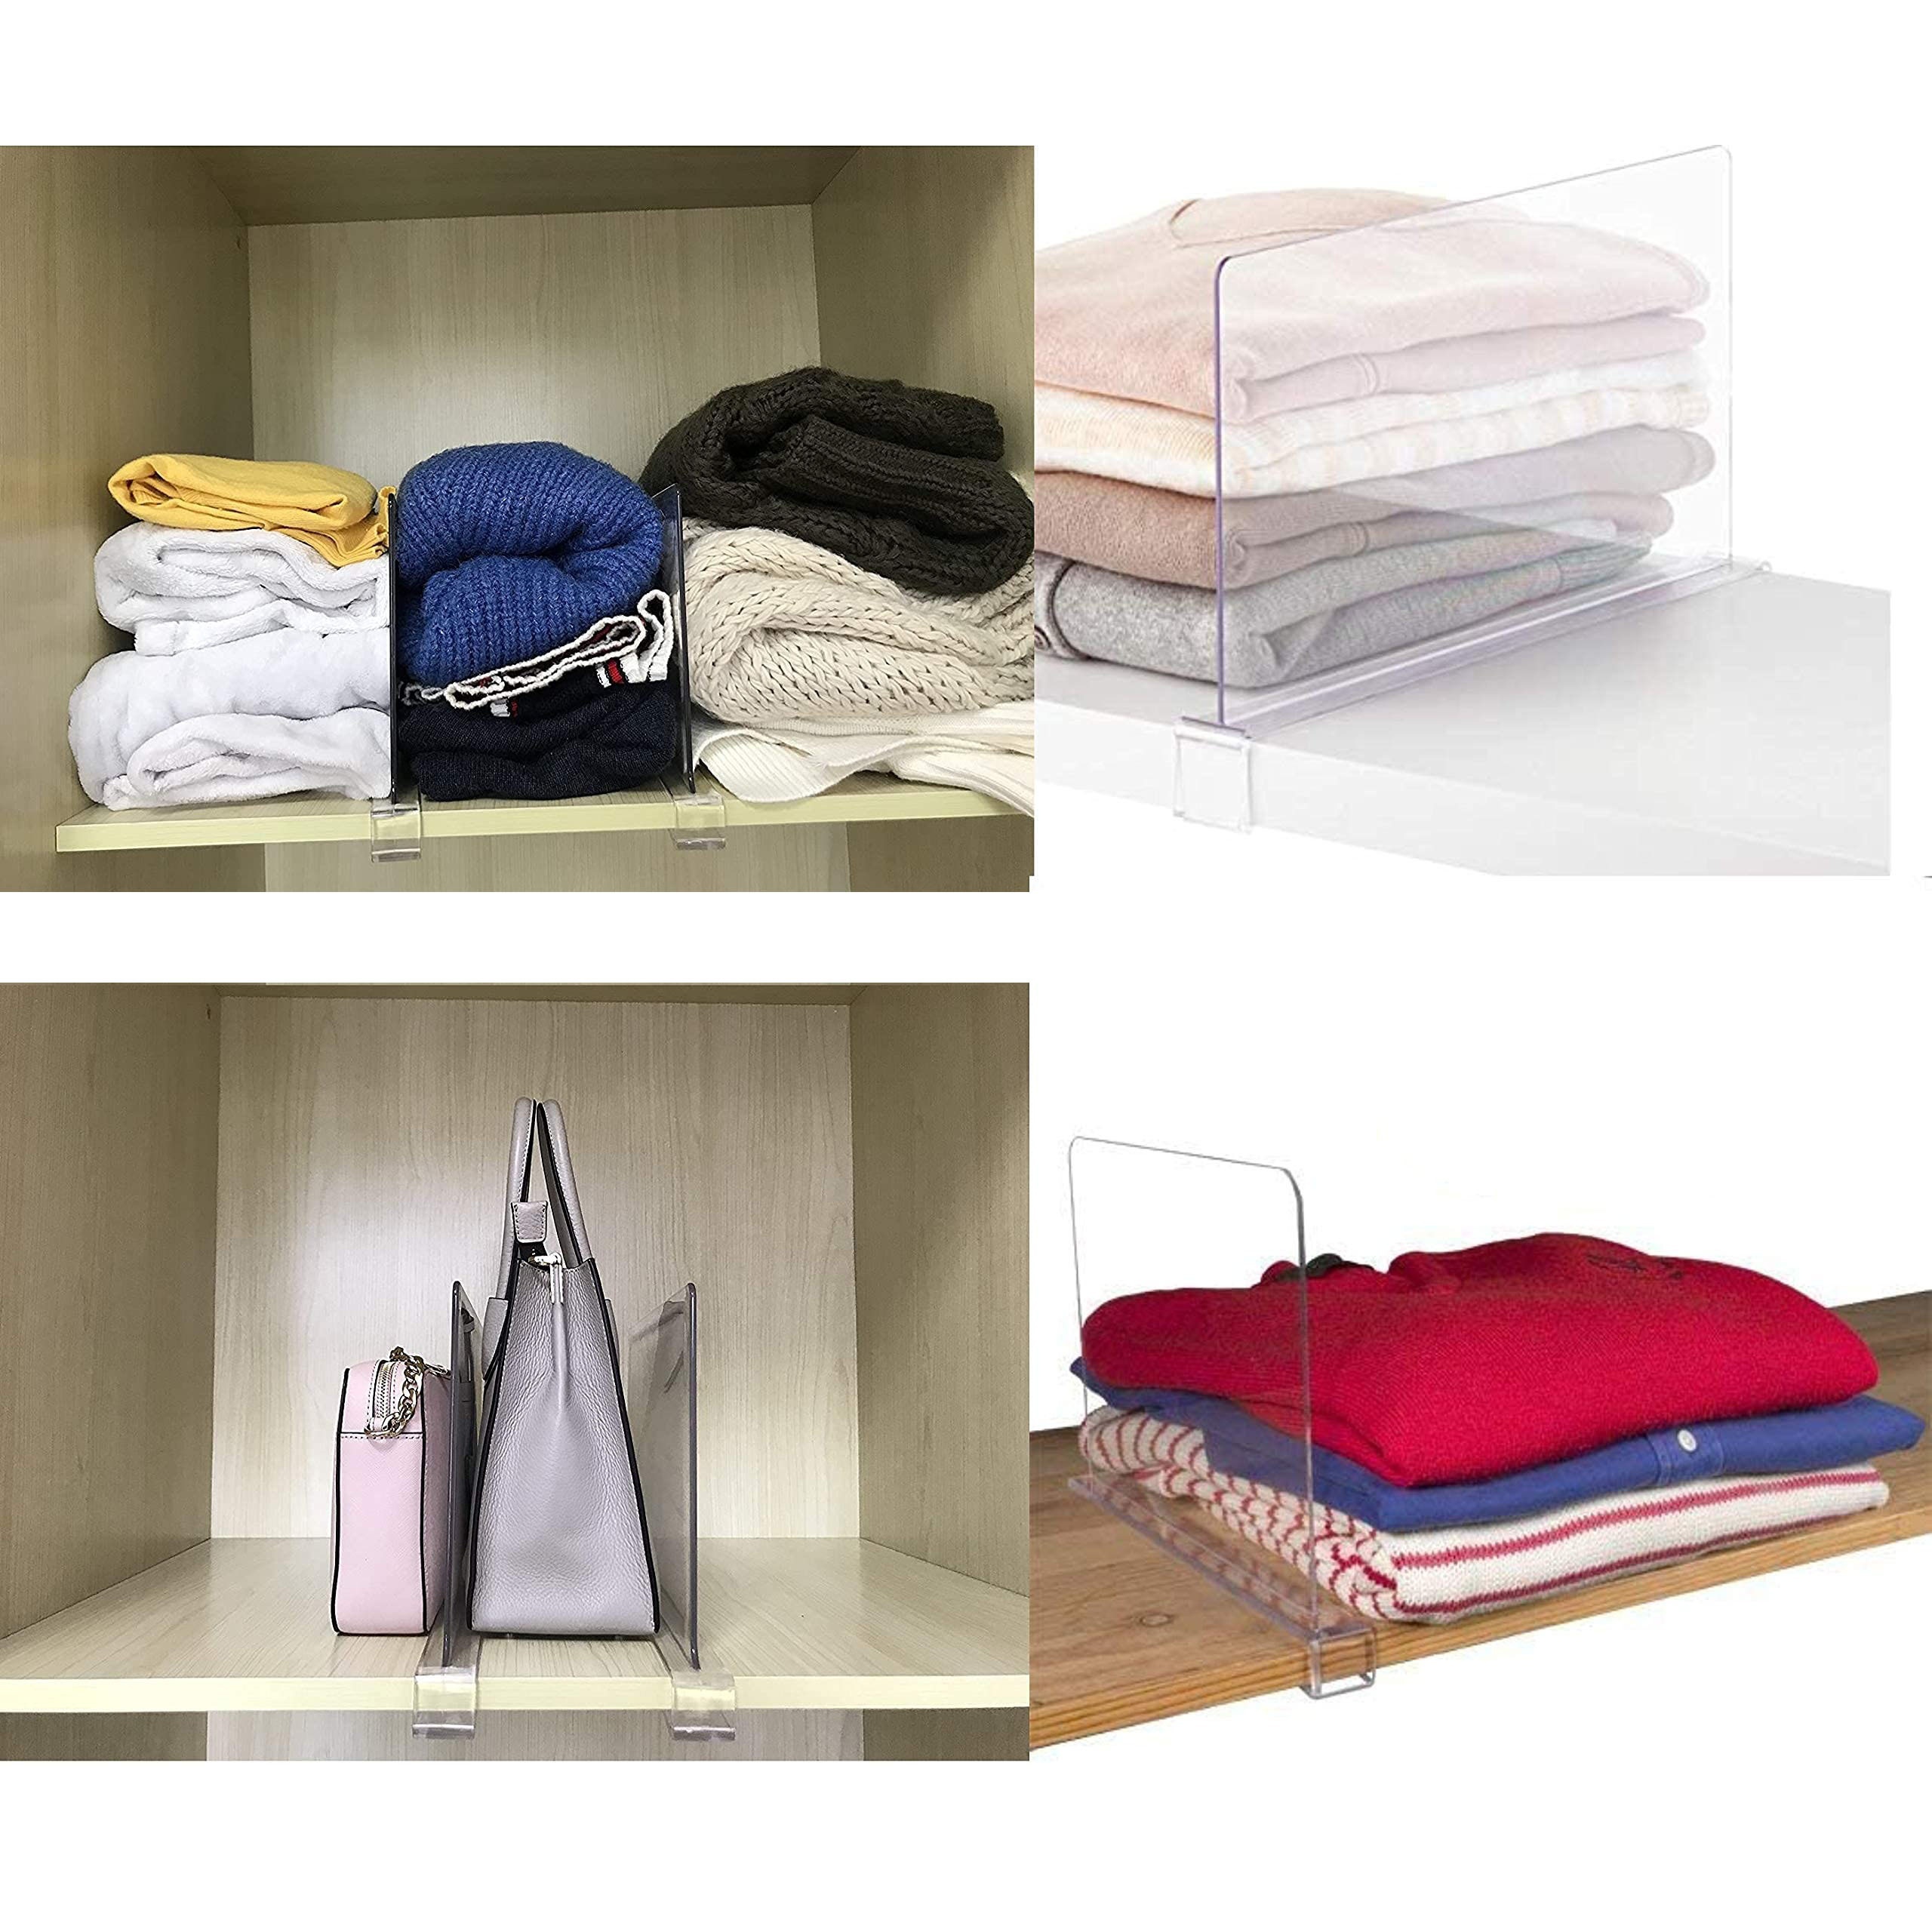 Large Acrylic Shelf Dividers for Closet Organization 2PCS Closet